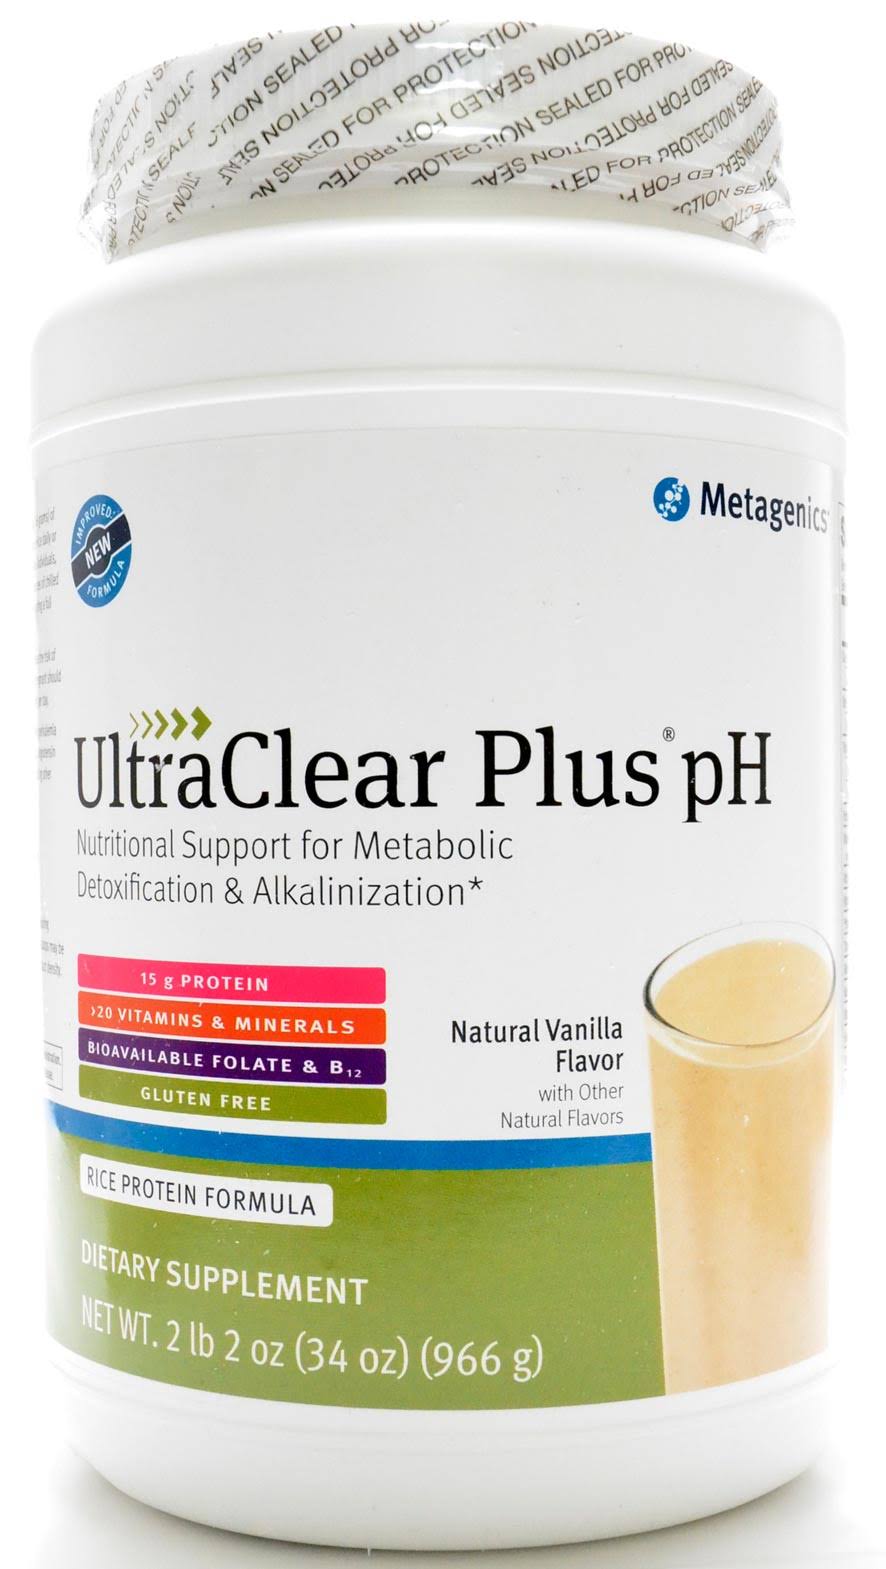 Metagenics Ultraclear Plus Ph Protein Formula - Natural Vanilla, 34oz